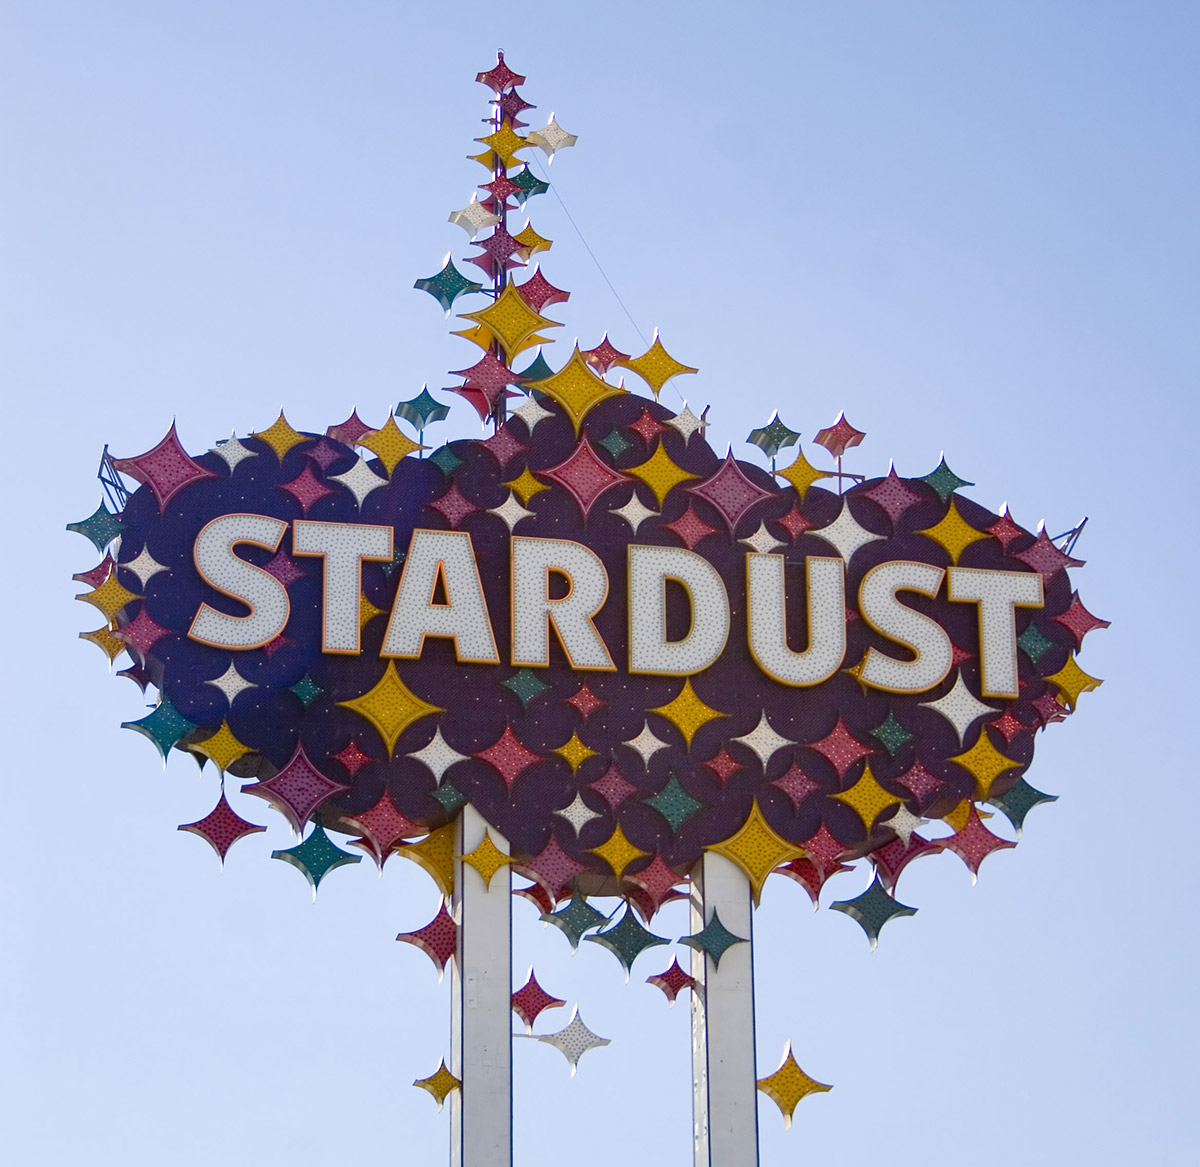 Stardust casino game